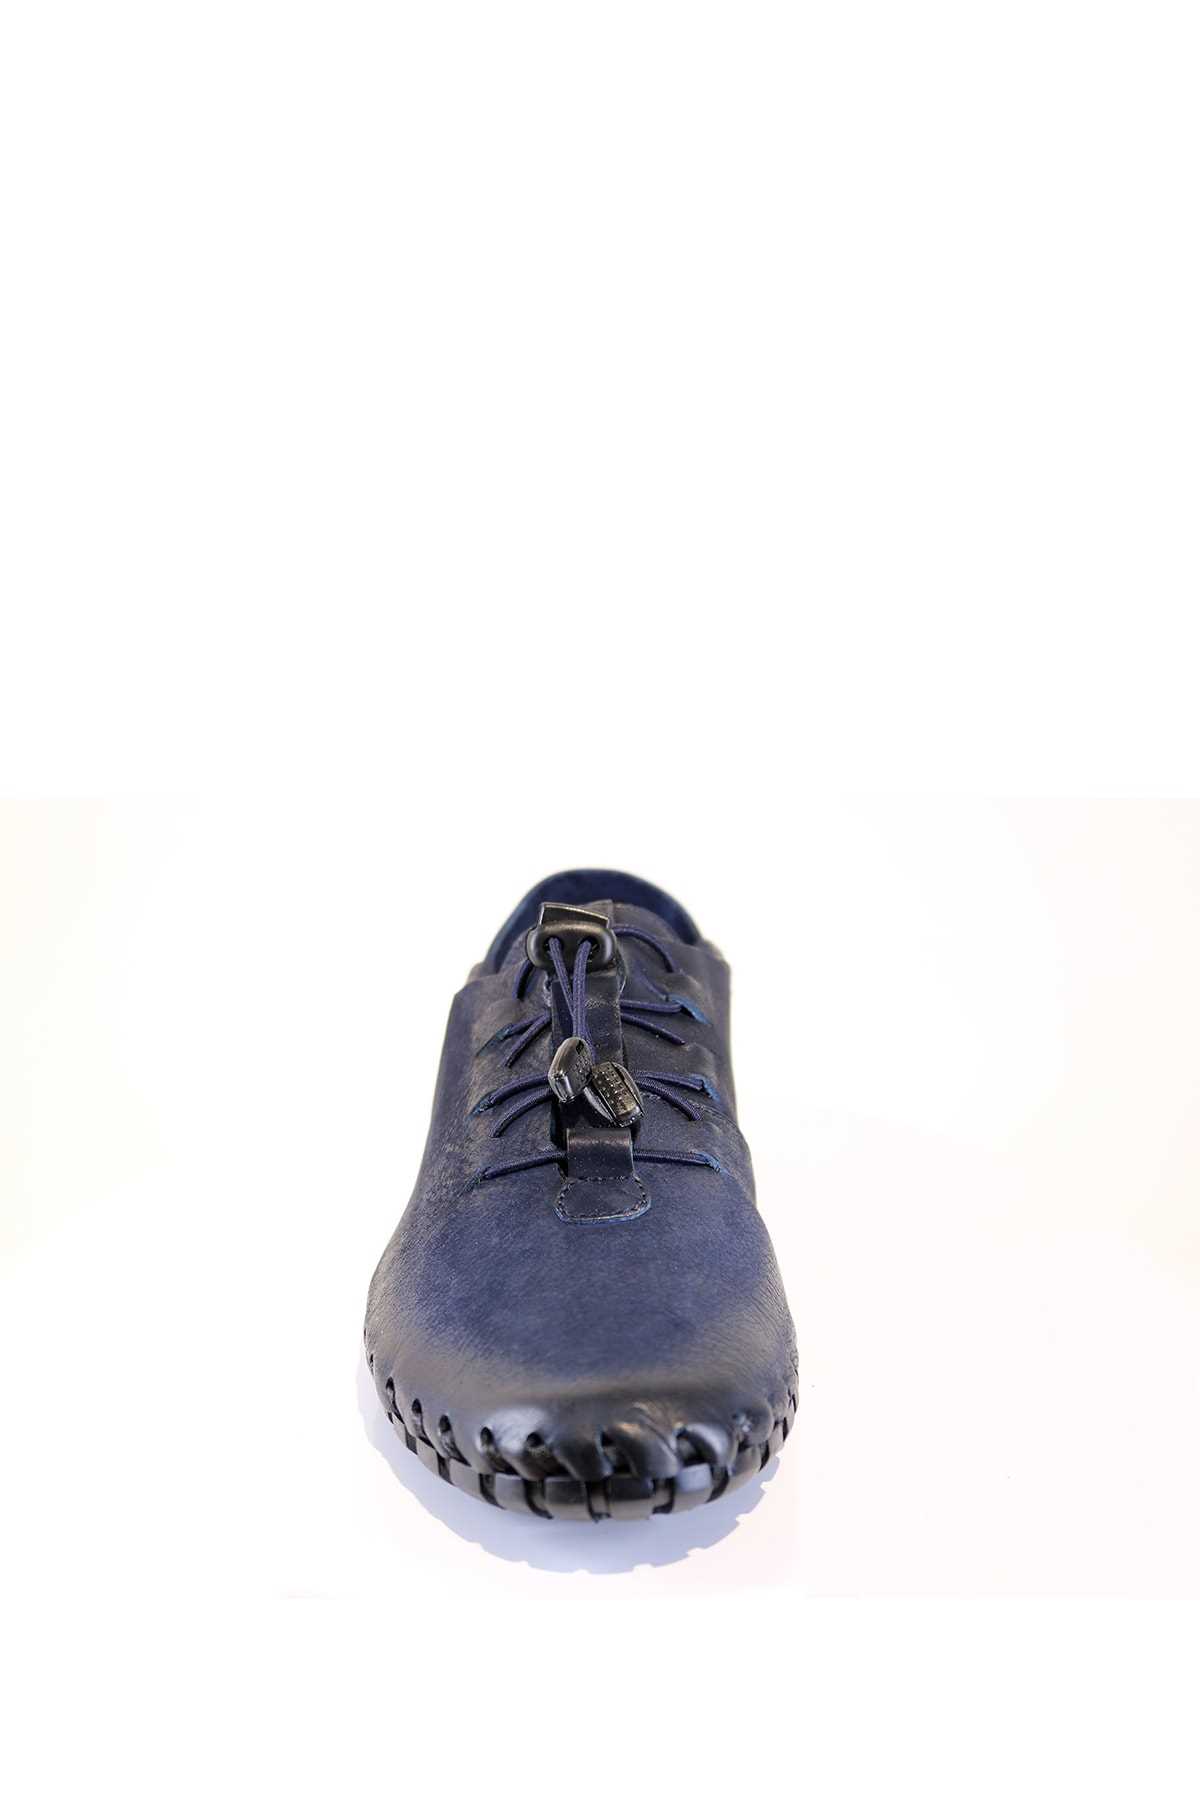 کفش کلاسیک مردانه مدل دار شیک Onemarka رنگ لاجوردی کد ty59280797